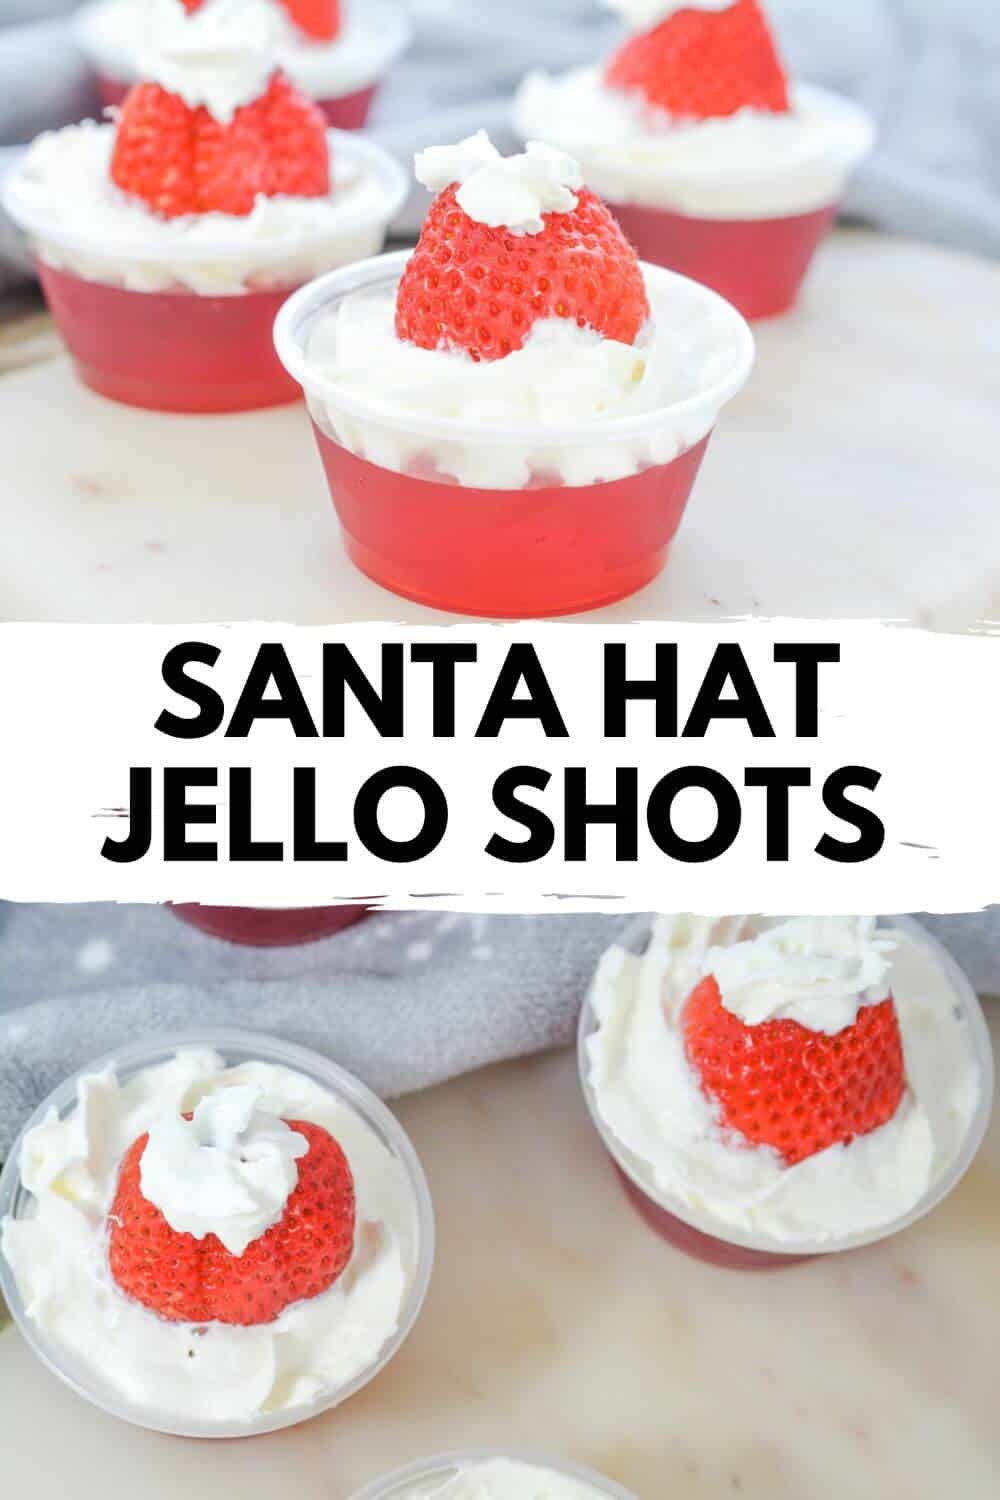 Get festive with these tasty Santa hat jello shots.